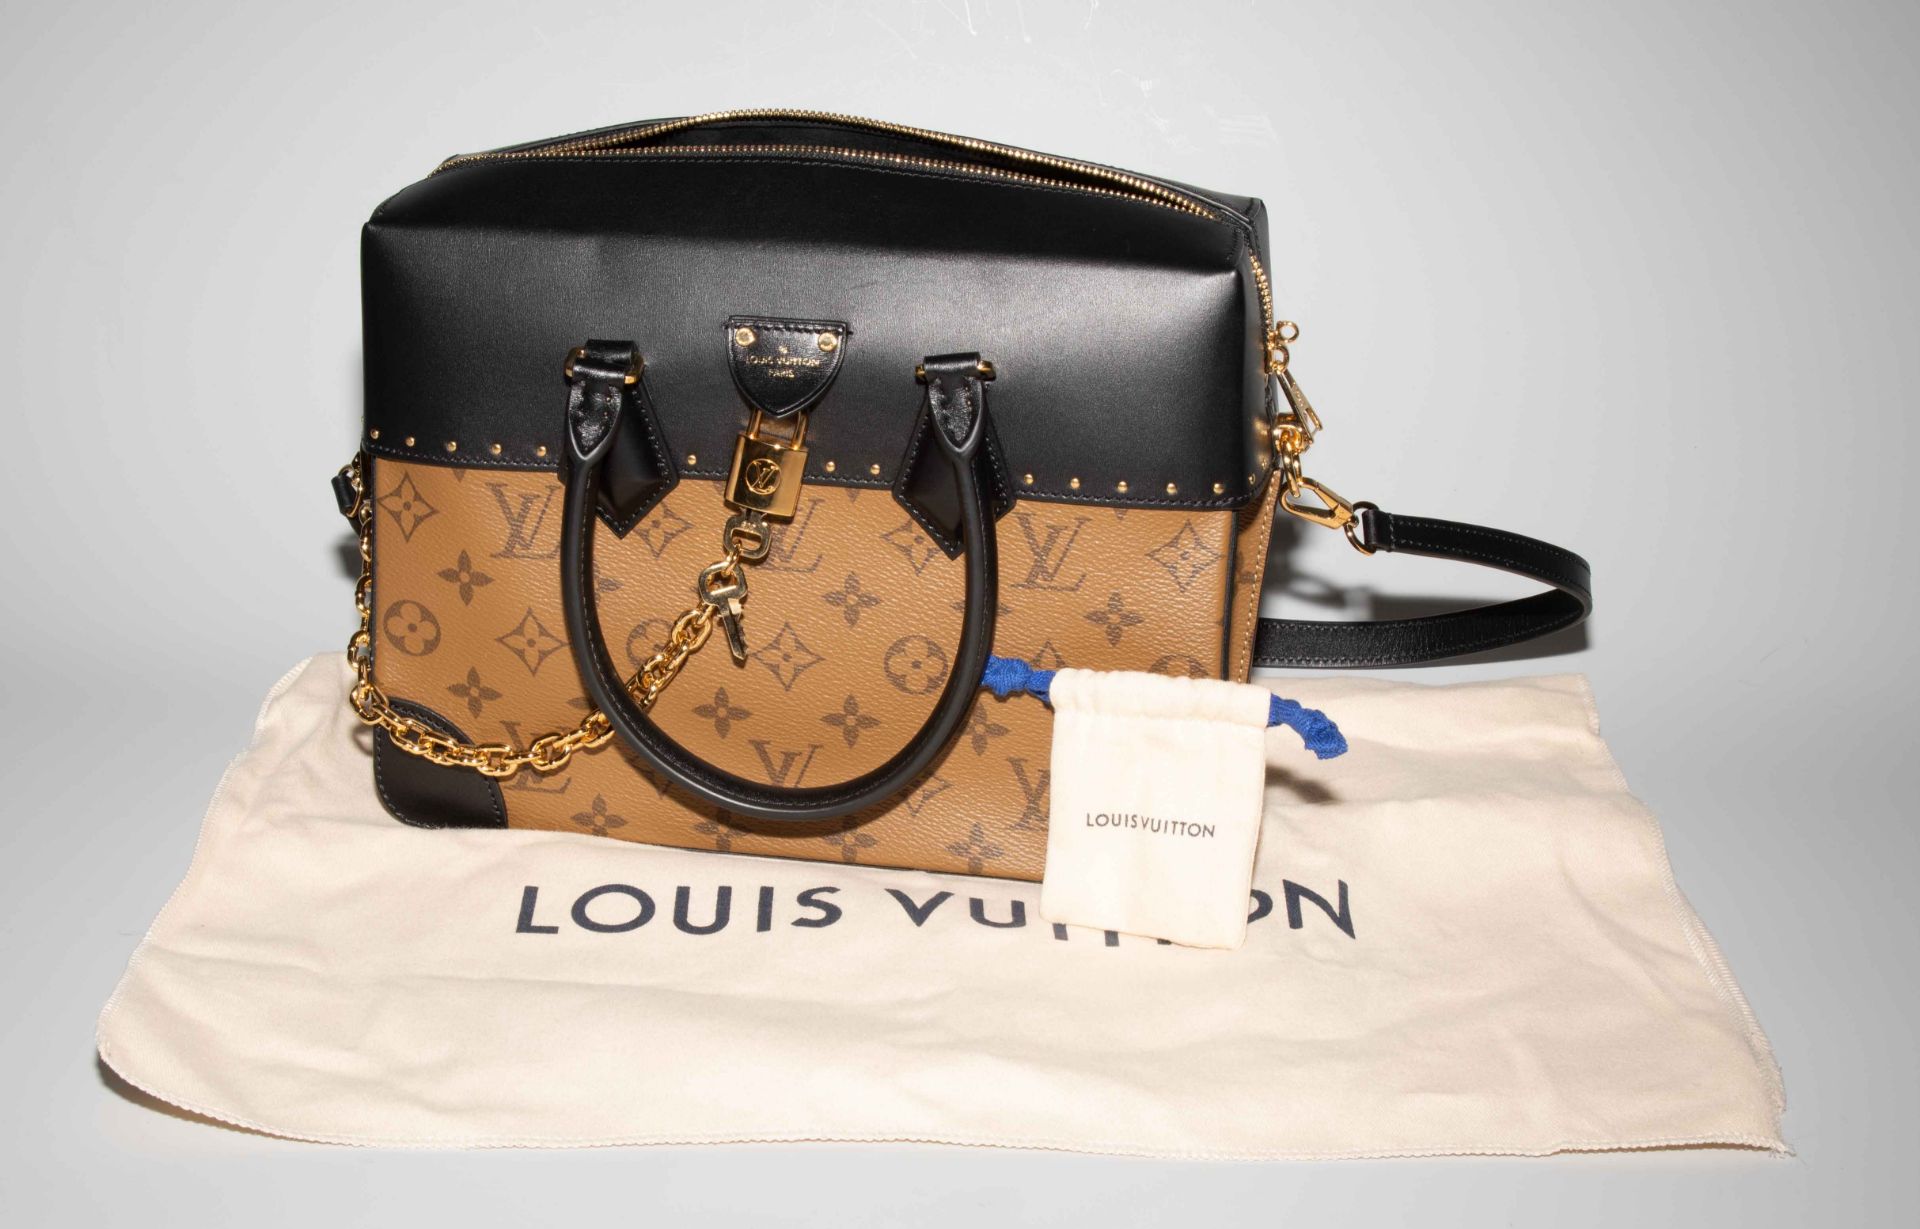 Louis Vuitton, Handtasche "City Malle" - Image 13 of 14